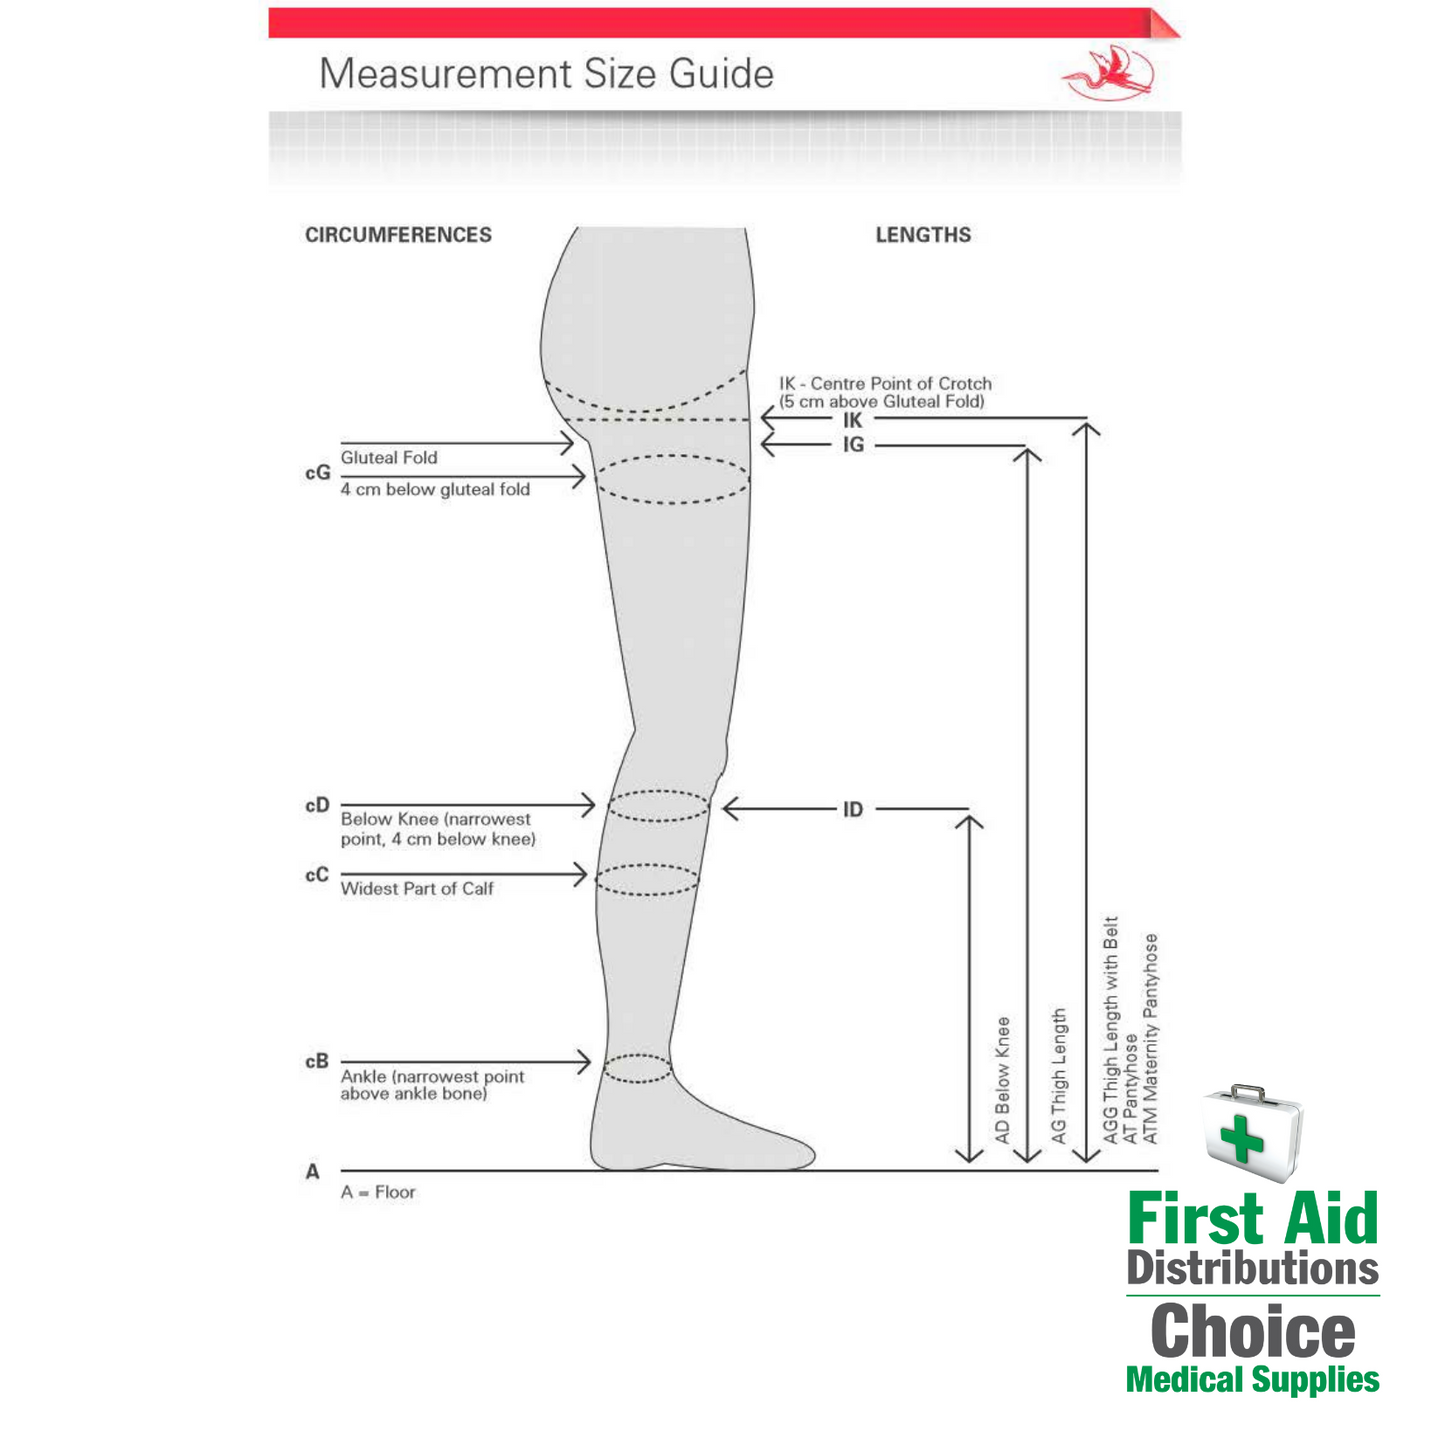 MicroFiberline Compression Socks for Men 15-20 mmHg - Venosan (1)